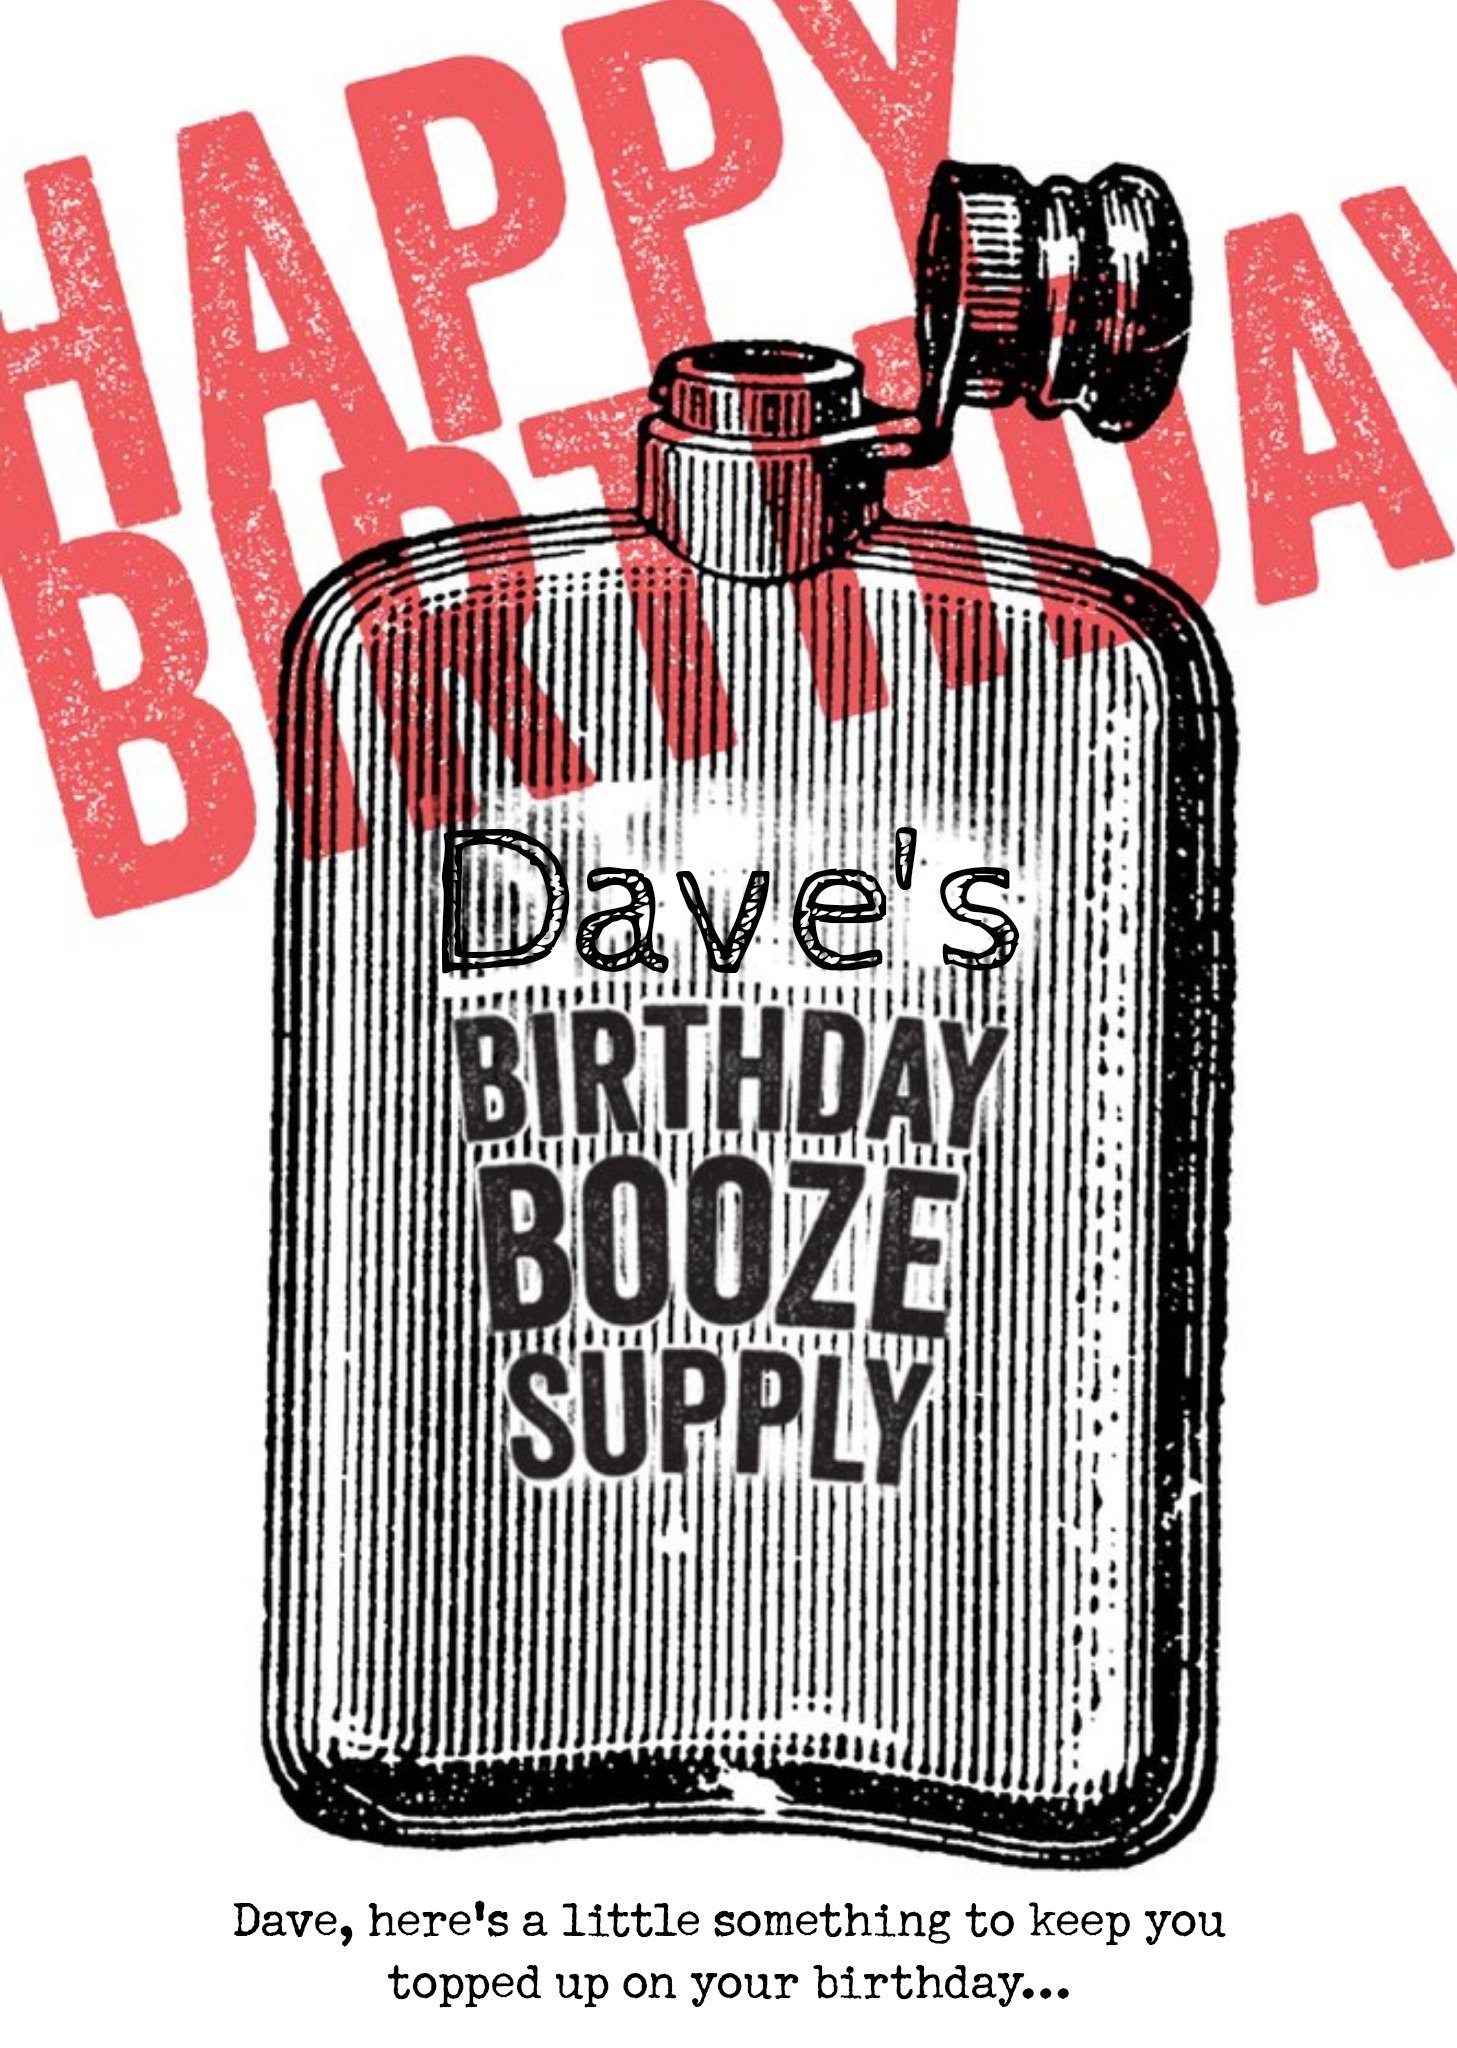 Moonpig Birthday Booze Supply Personalised Happy Birthday Card, Large